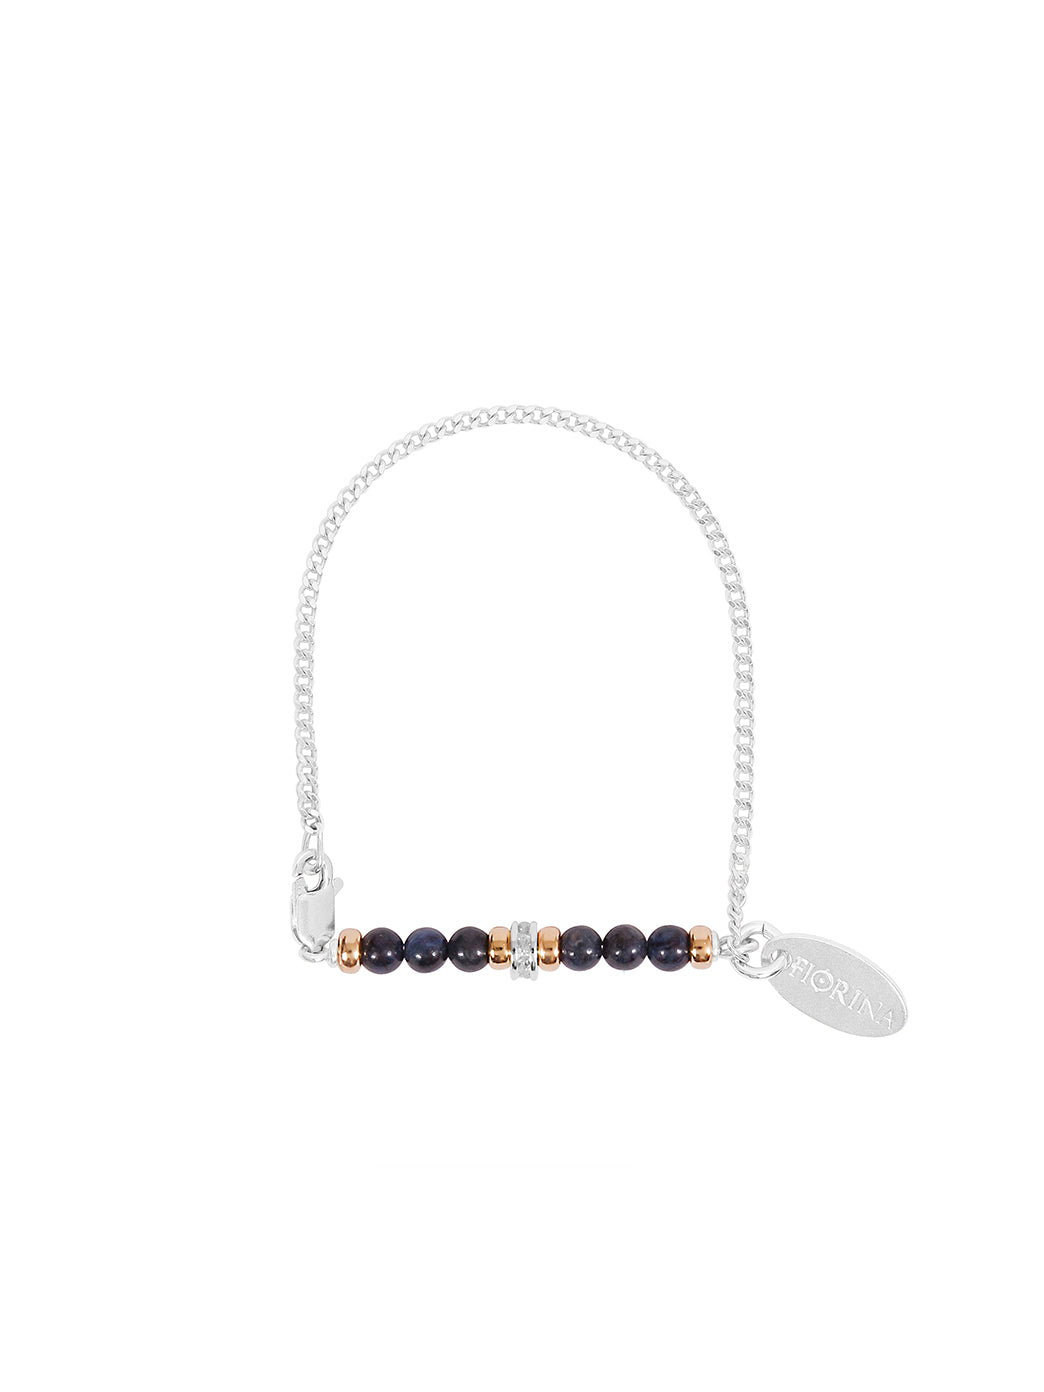 Fiorina Jewellery Romance Bracelet Navy